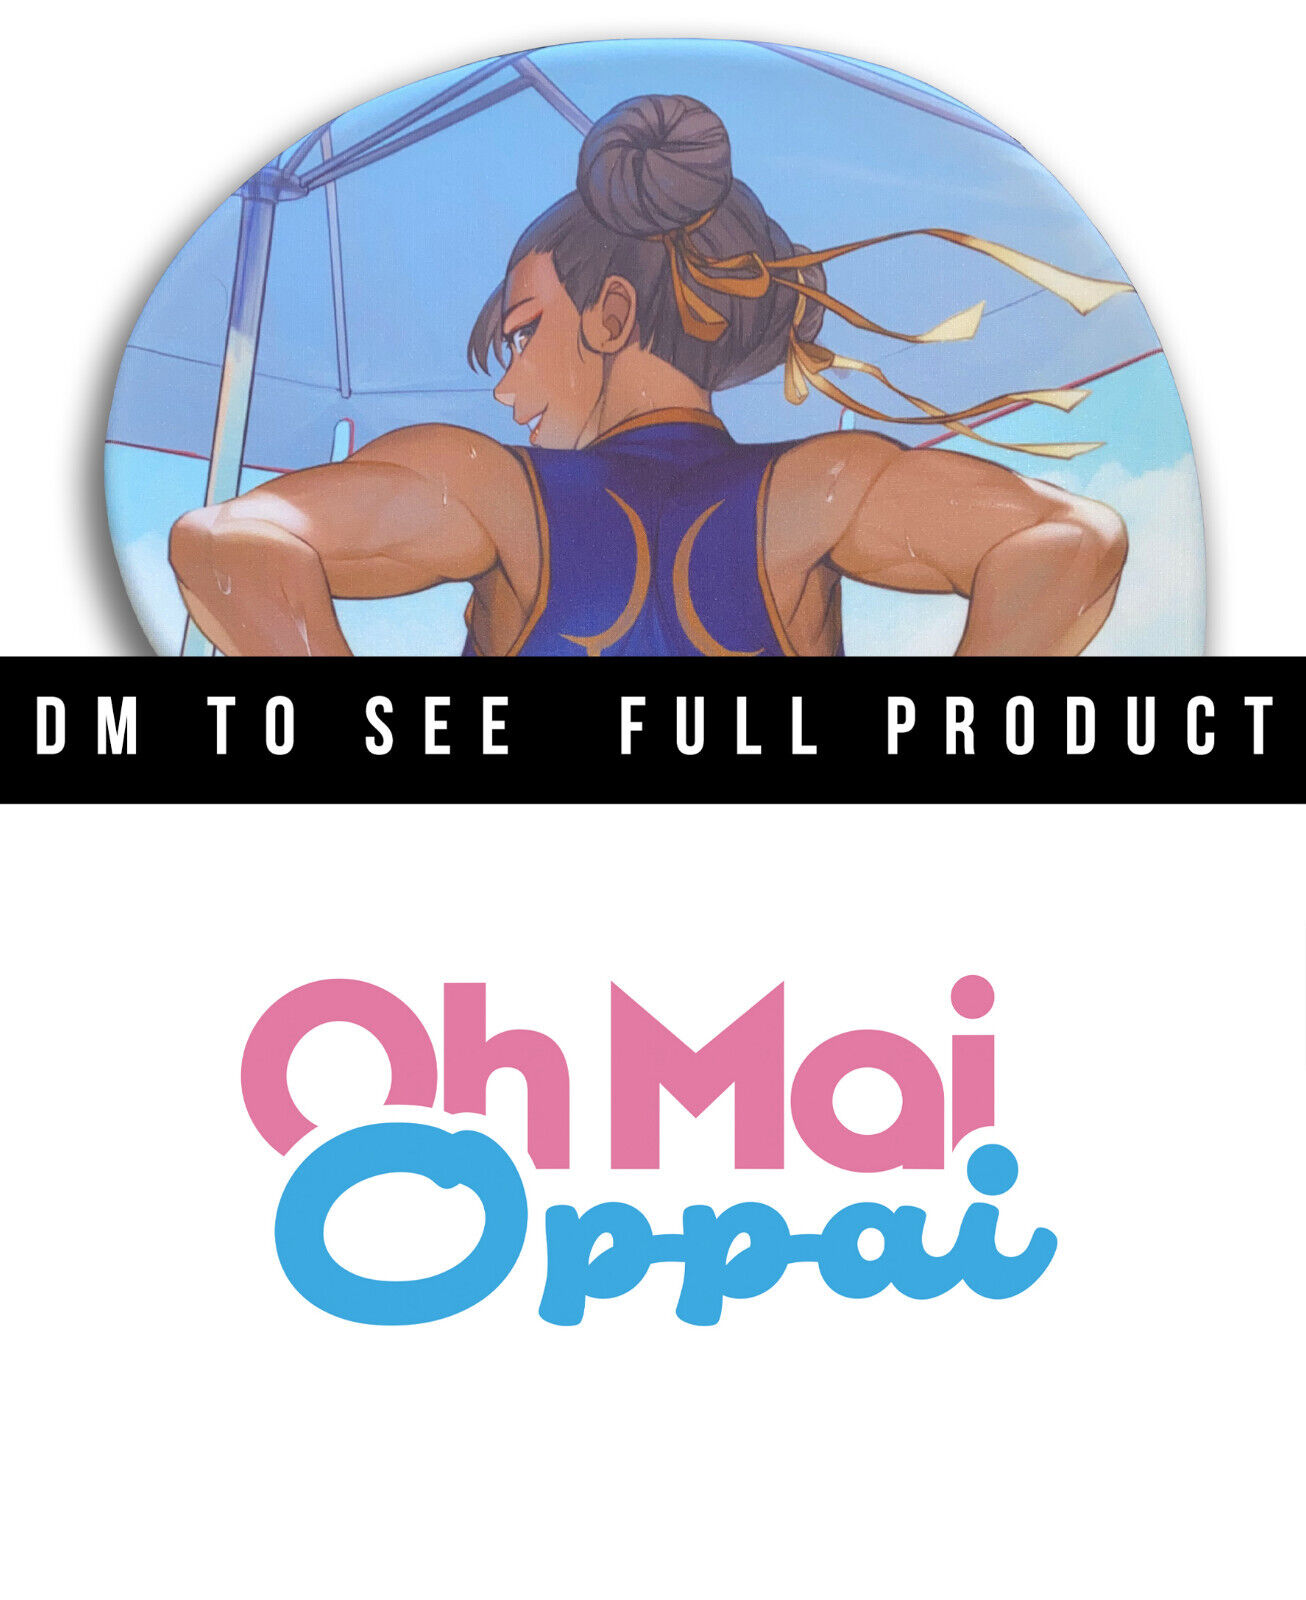 Chun Li from Street Fighter Oppai Mousepad - Version A.